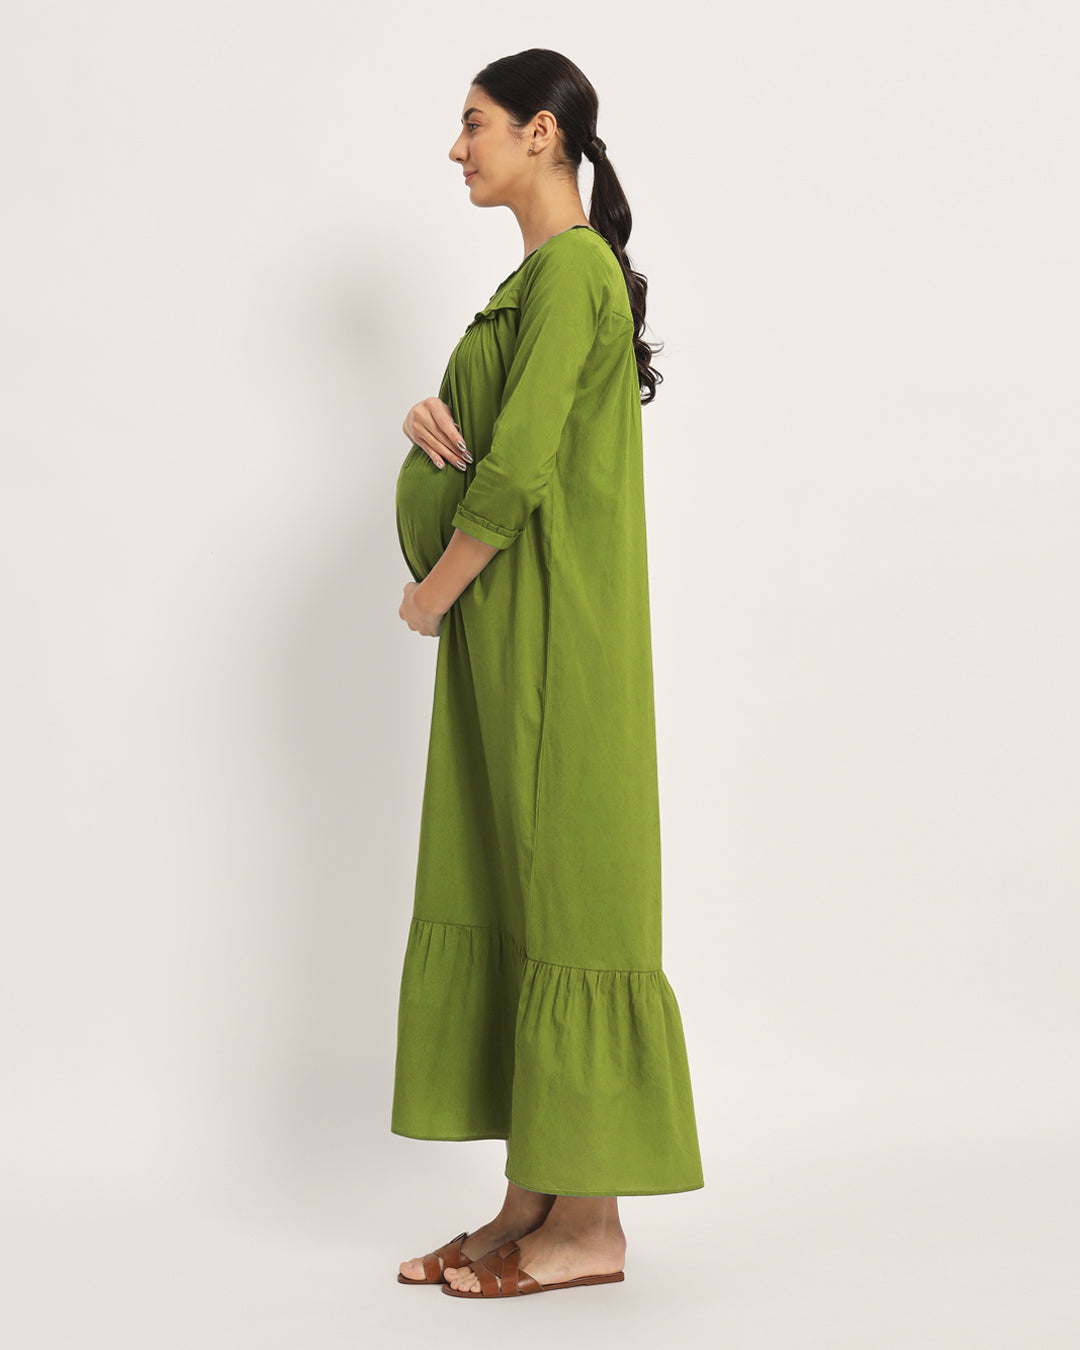 Combo: Iced Grey & Sage Green Bella Mama Maternity & Nursing Dress-Set of 2